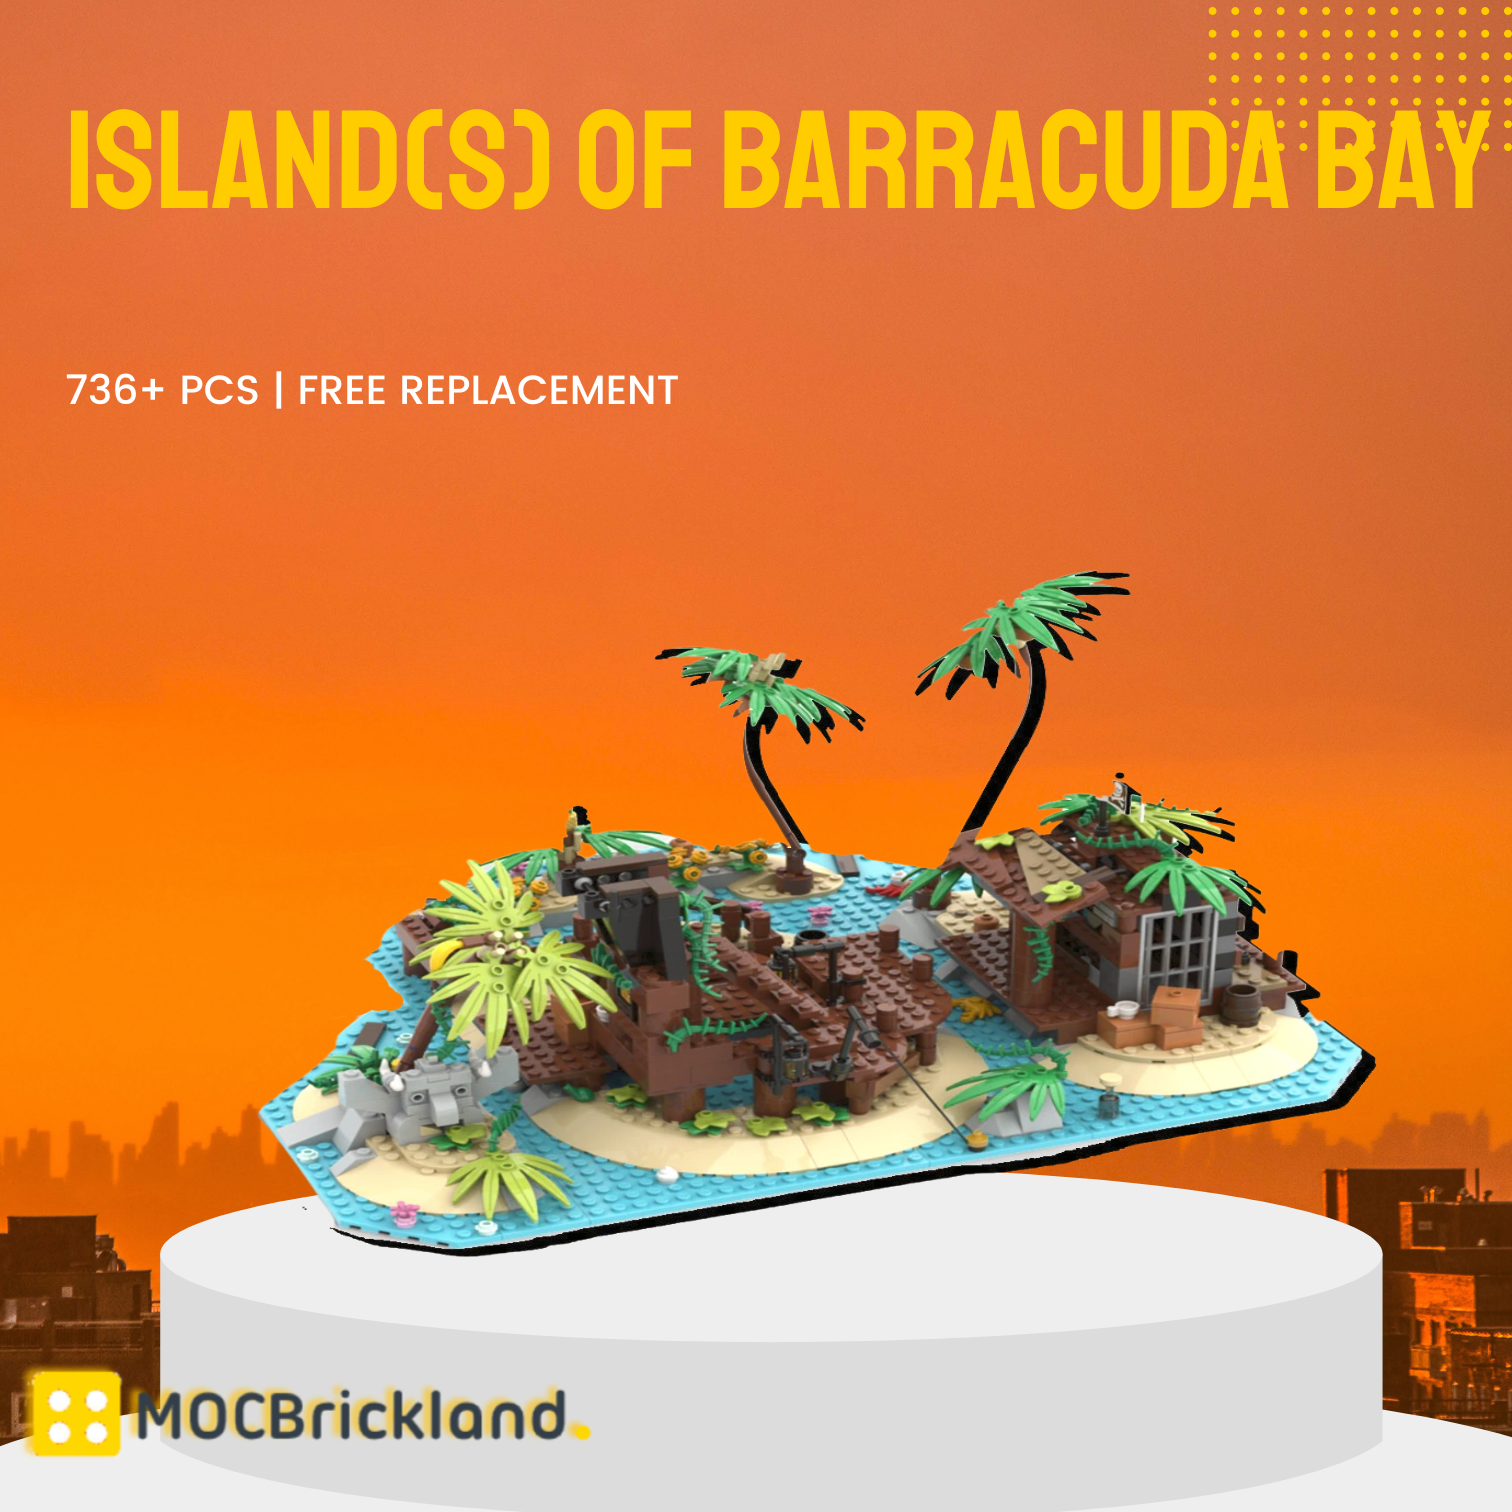 MOCBRICKLAND MOC-117866 Island(s) of Barracuda Bay 21322 Alt. Build